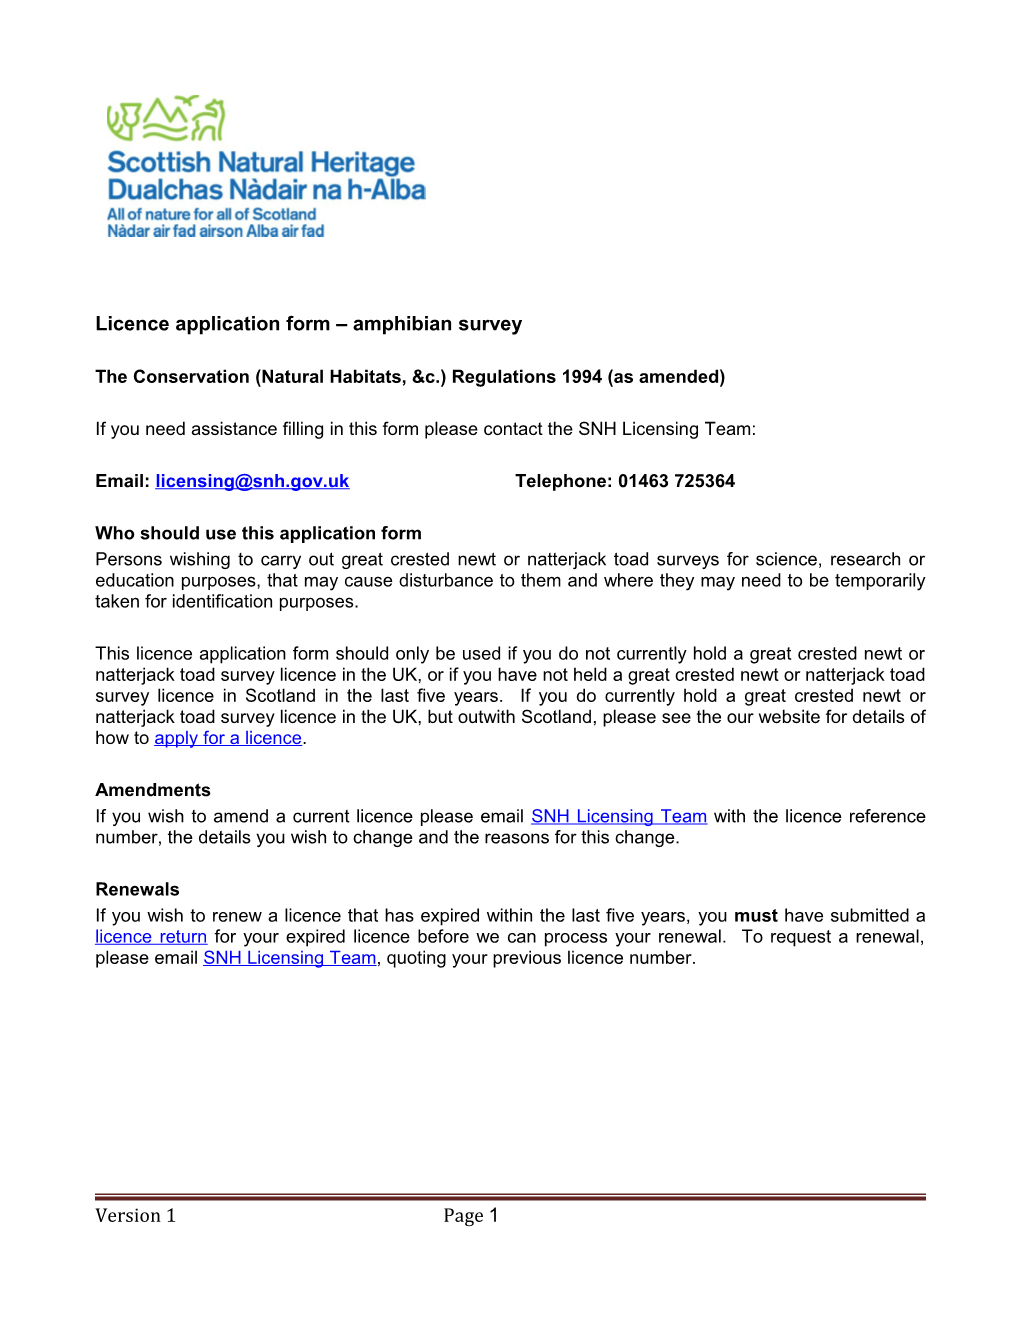 Licence Application Form Amphibiansurvey